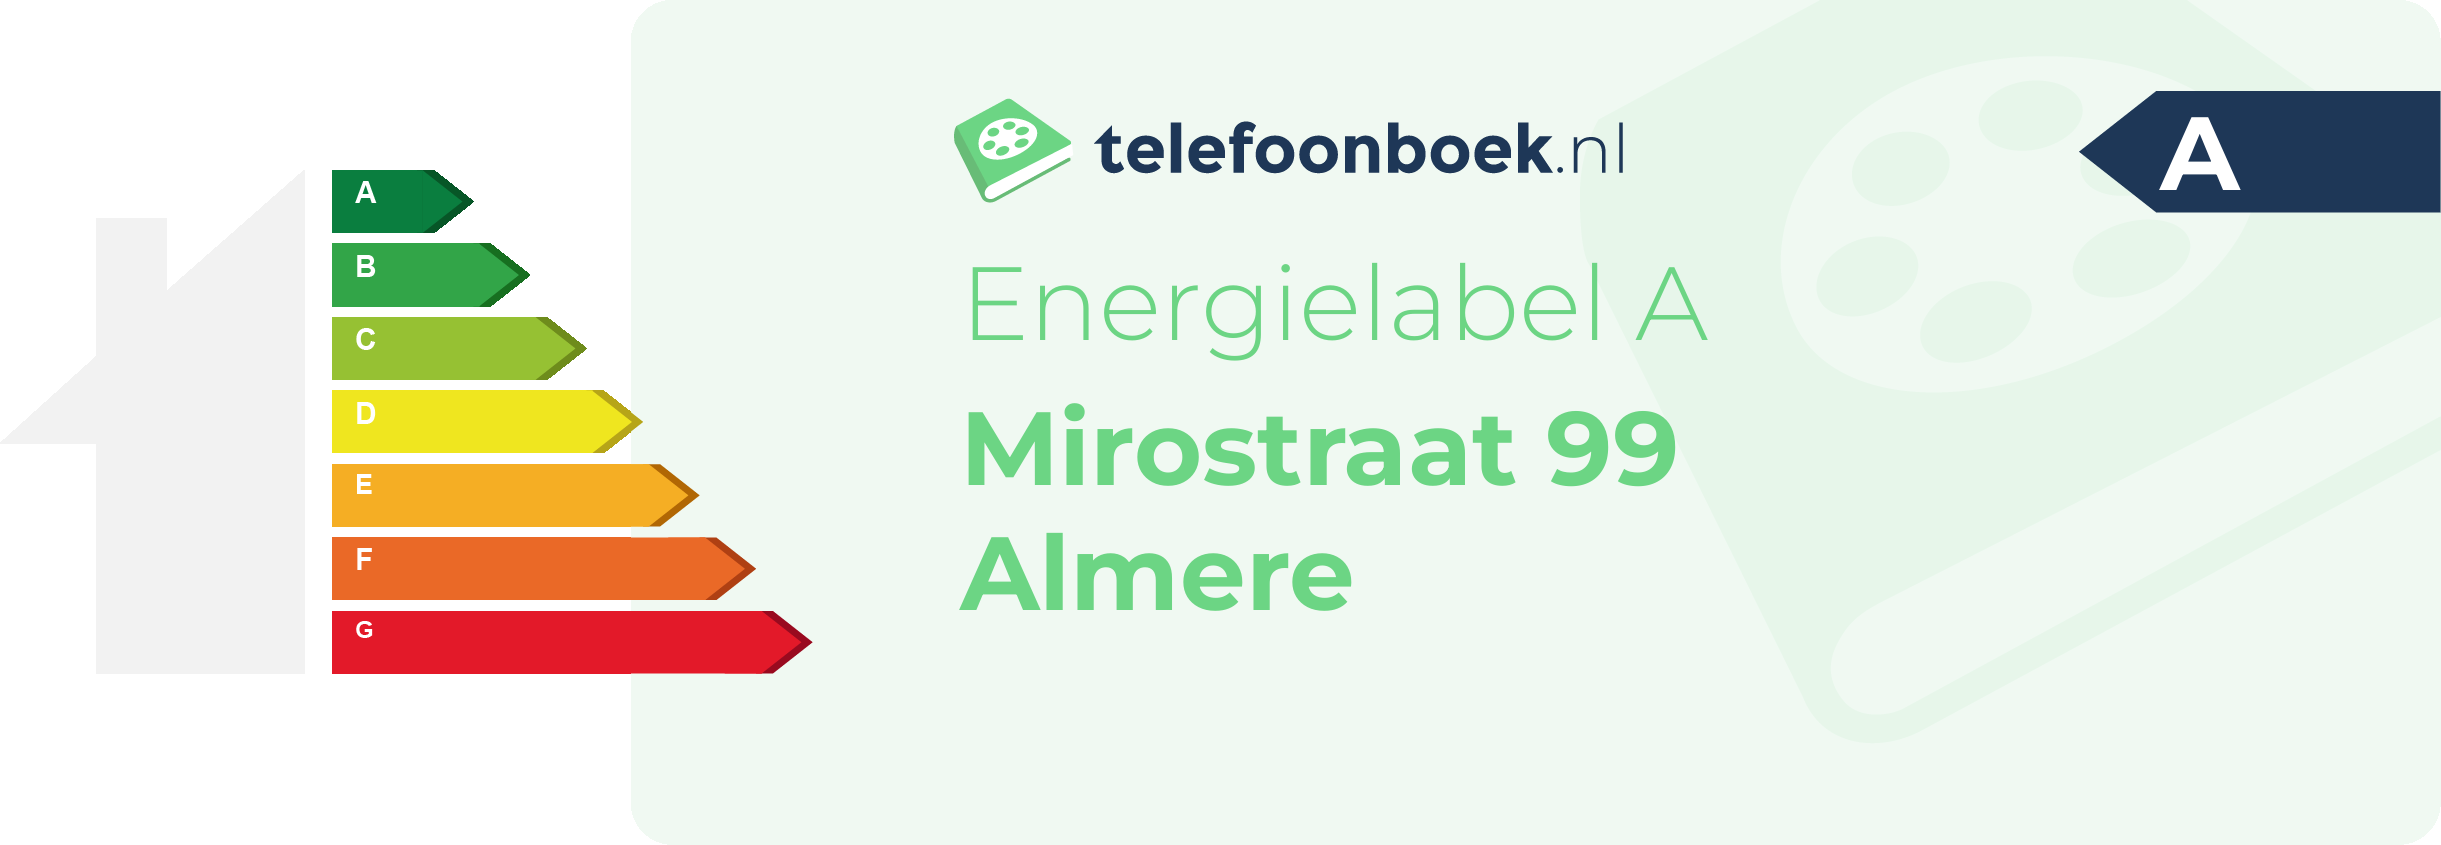 Energielabel Mirostraat 99 Almere